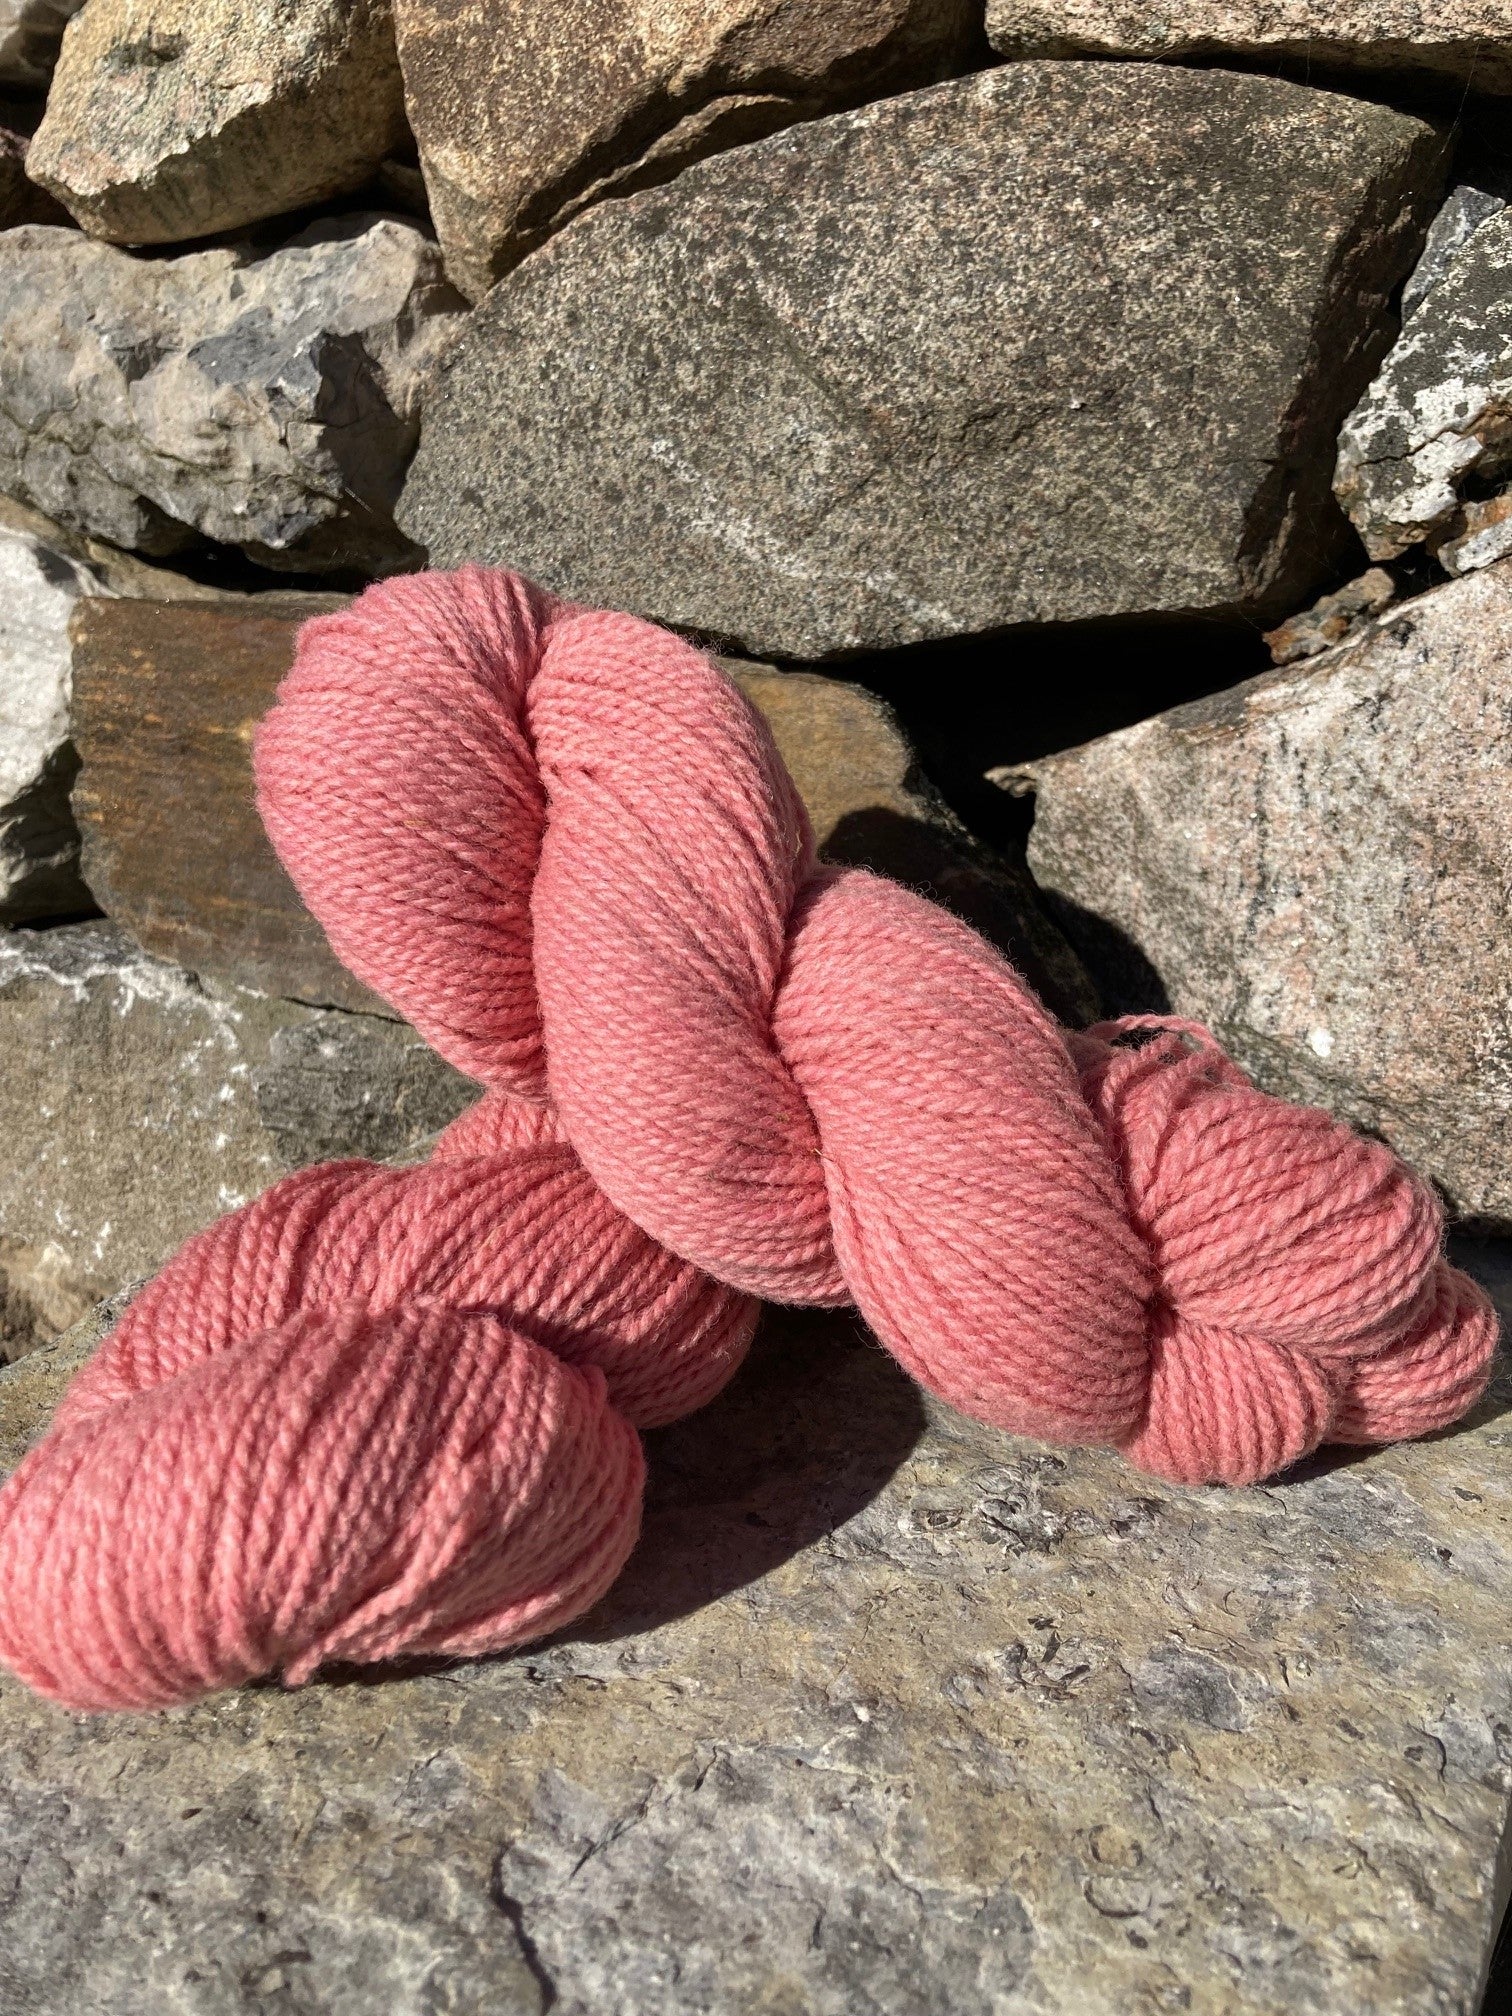 Soft Pink yarn